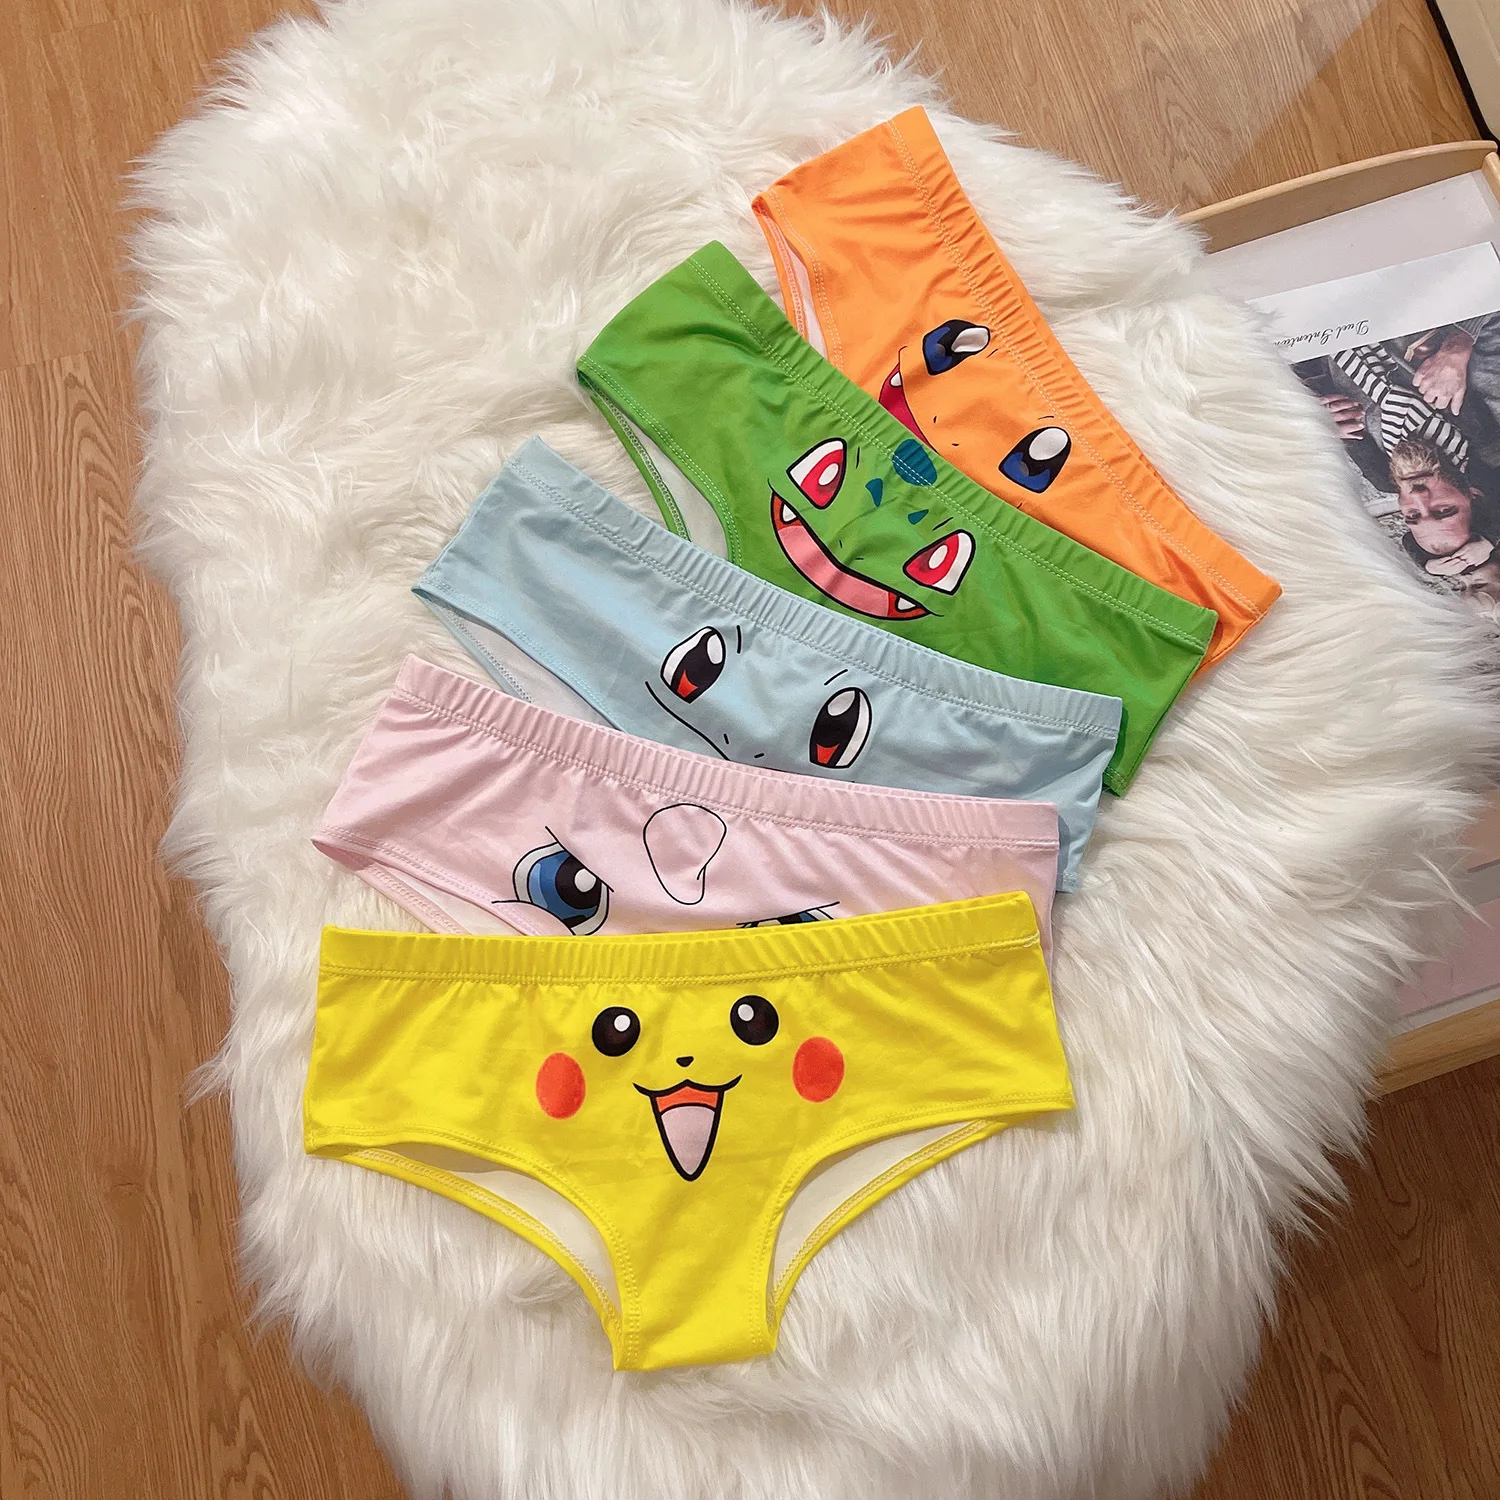 Would you buy these pokemon underpants? #pokemon #pokemonapparel #unde